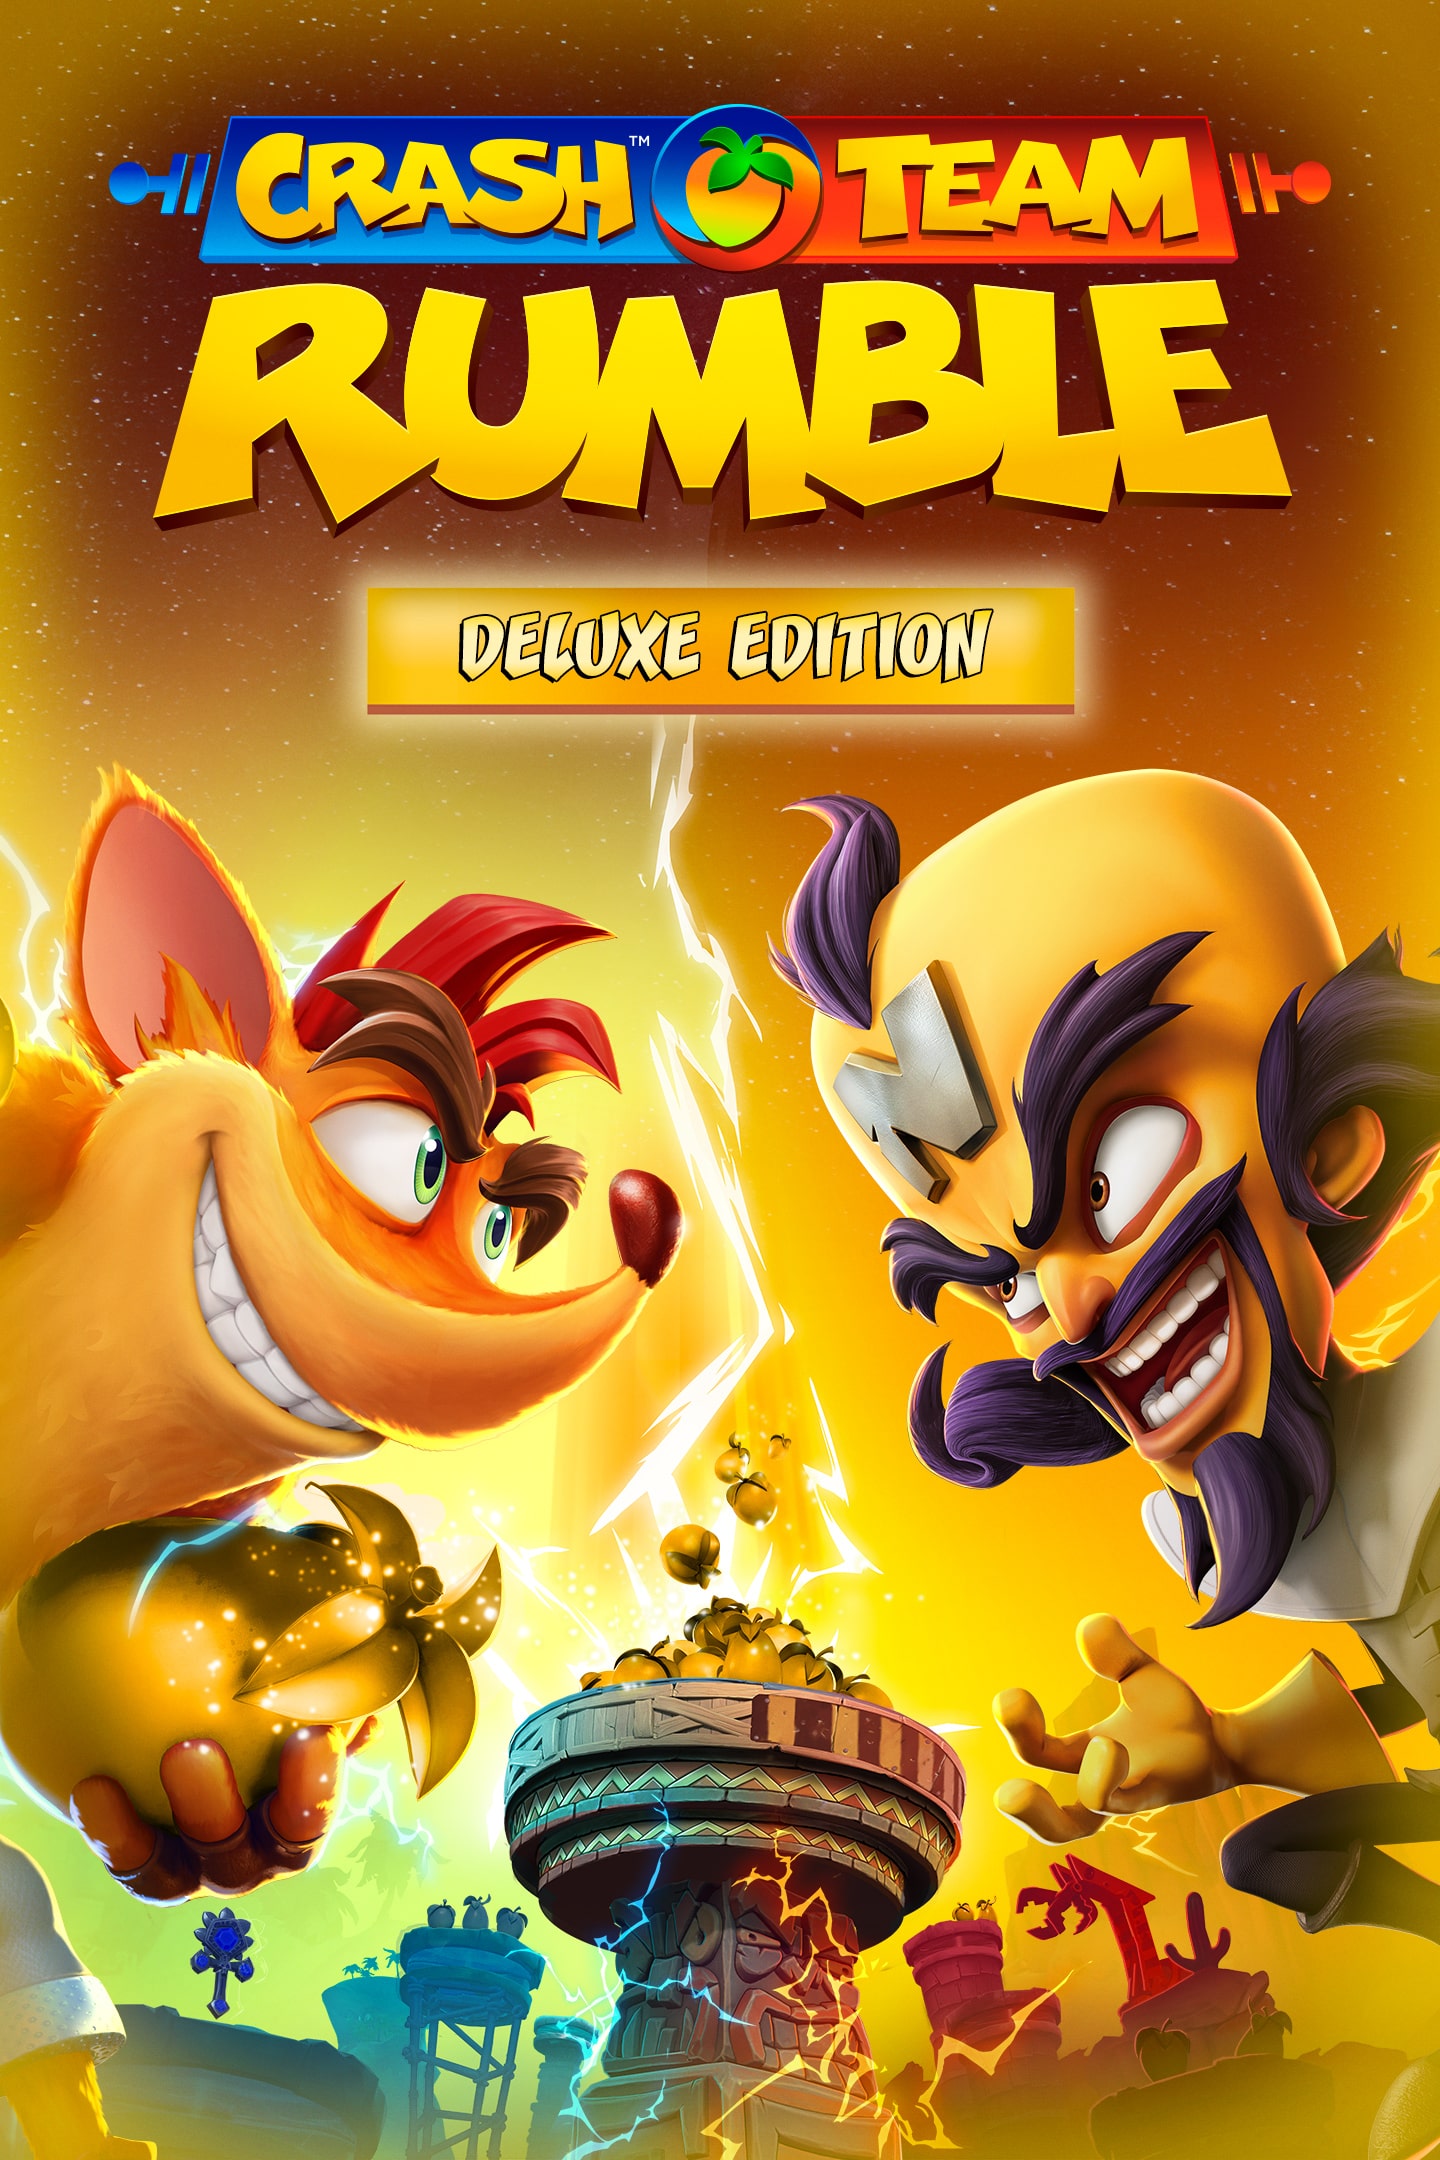 Crash - Team Deluxe Edition Rumble™